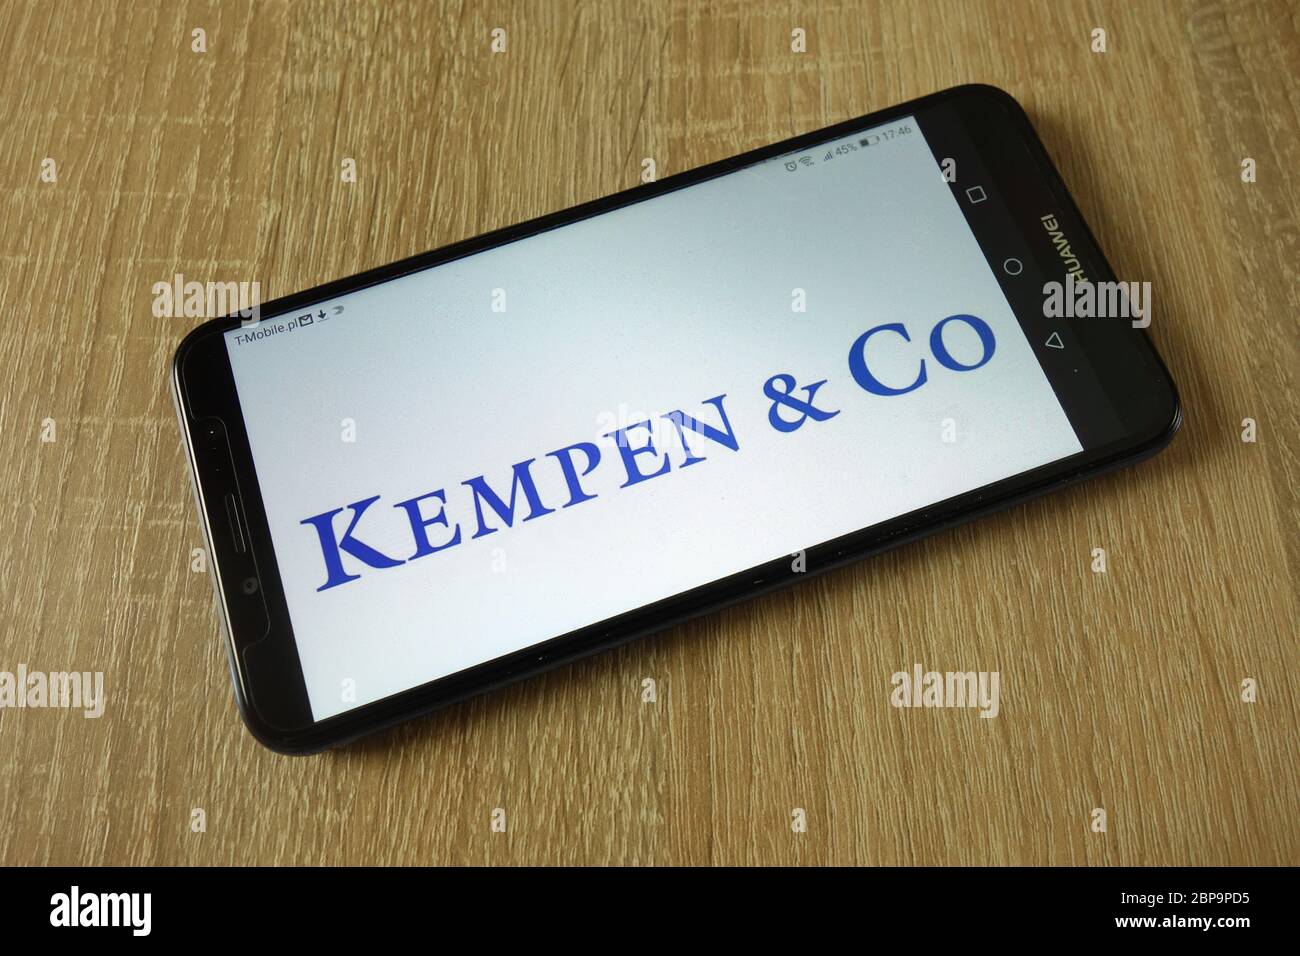 Kempen & Co Banklogo auf dem Smartphone angezeigt Stockfoto